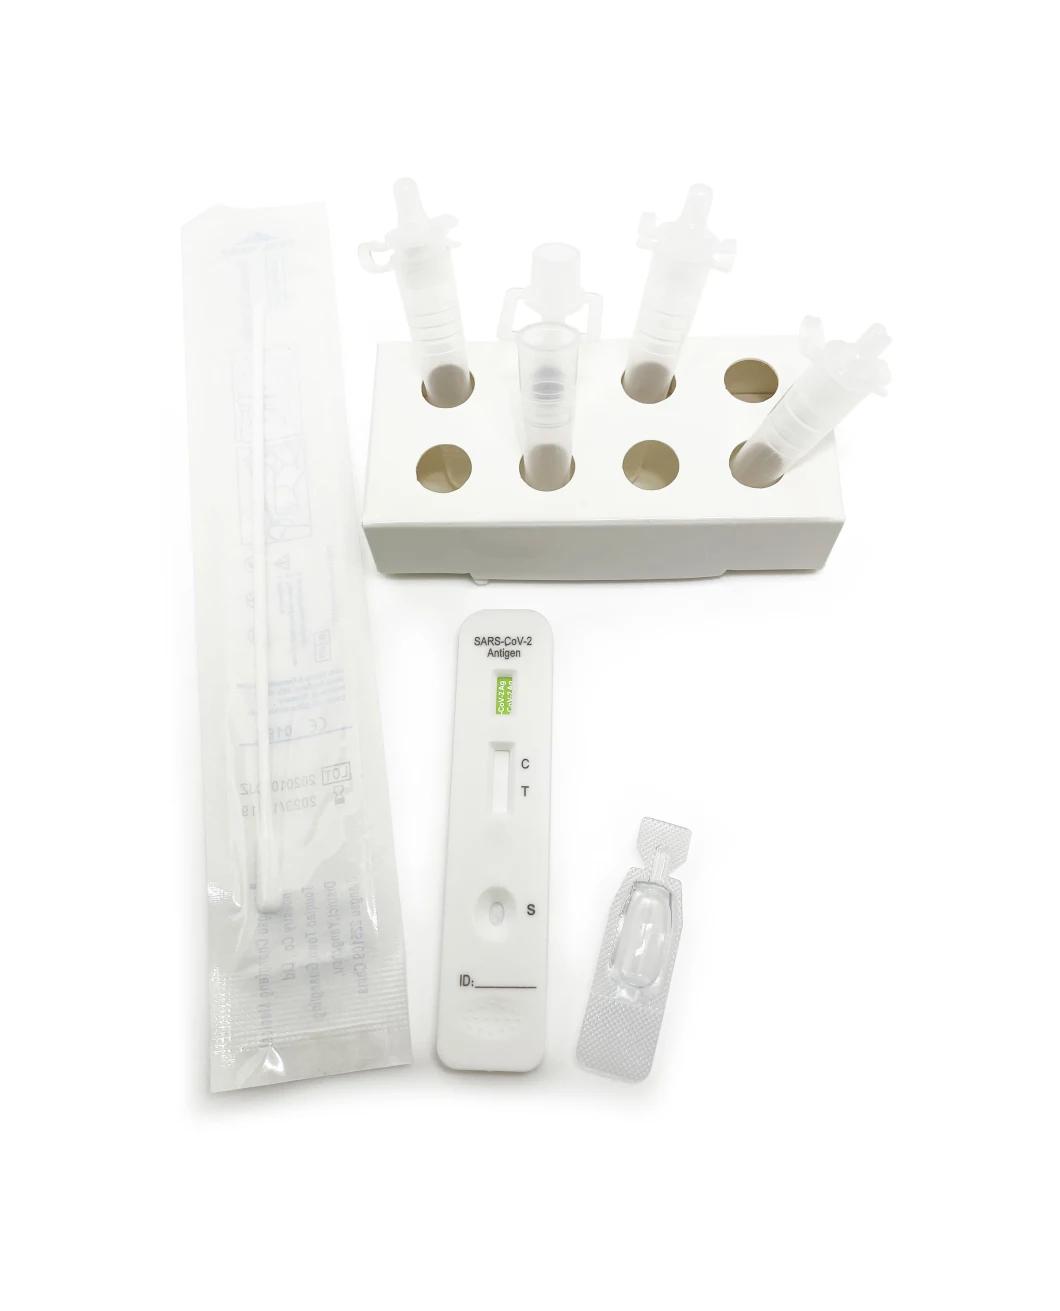 CE Approve Home Use Antigen Test Cassette Kit, Antigen Oropharyngeal Rapid Test